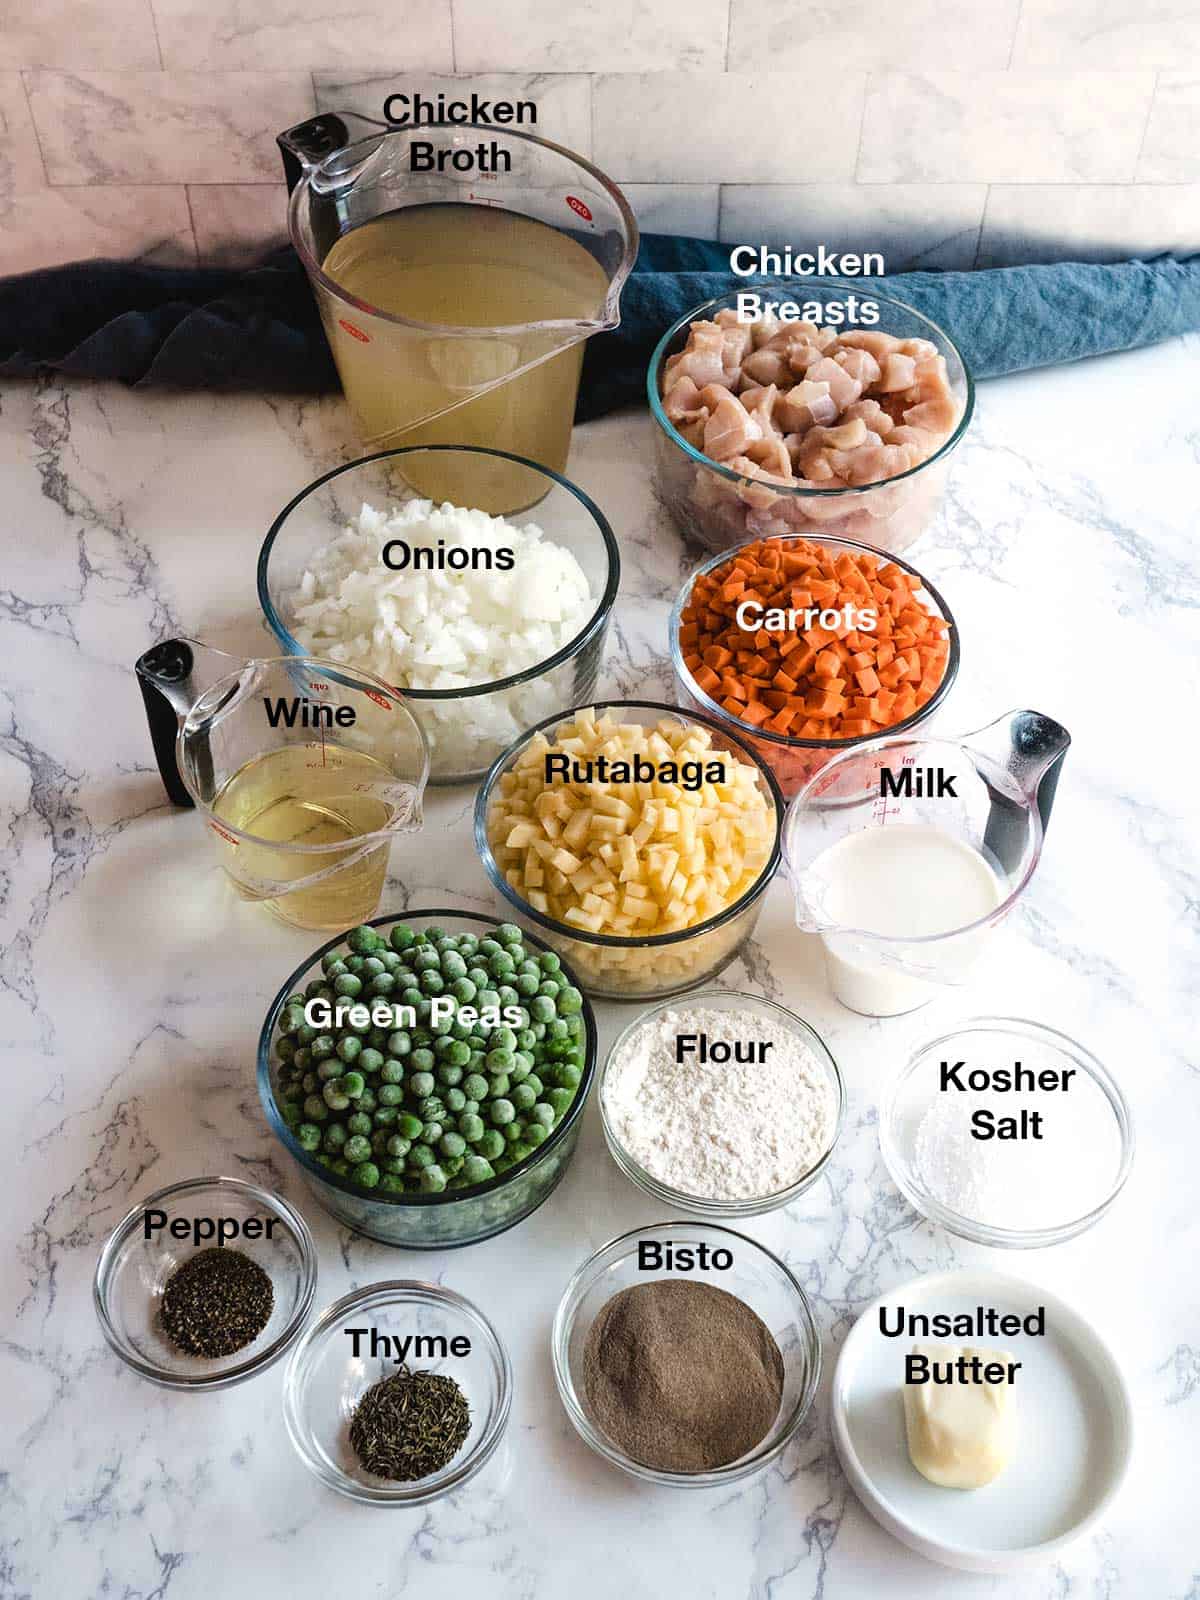 Ingredients used in making the chicken pot pie mixture.